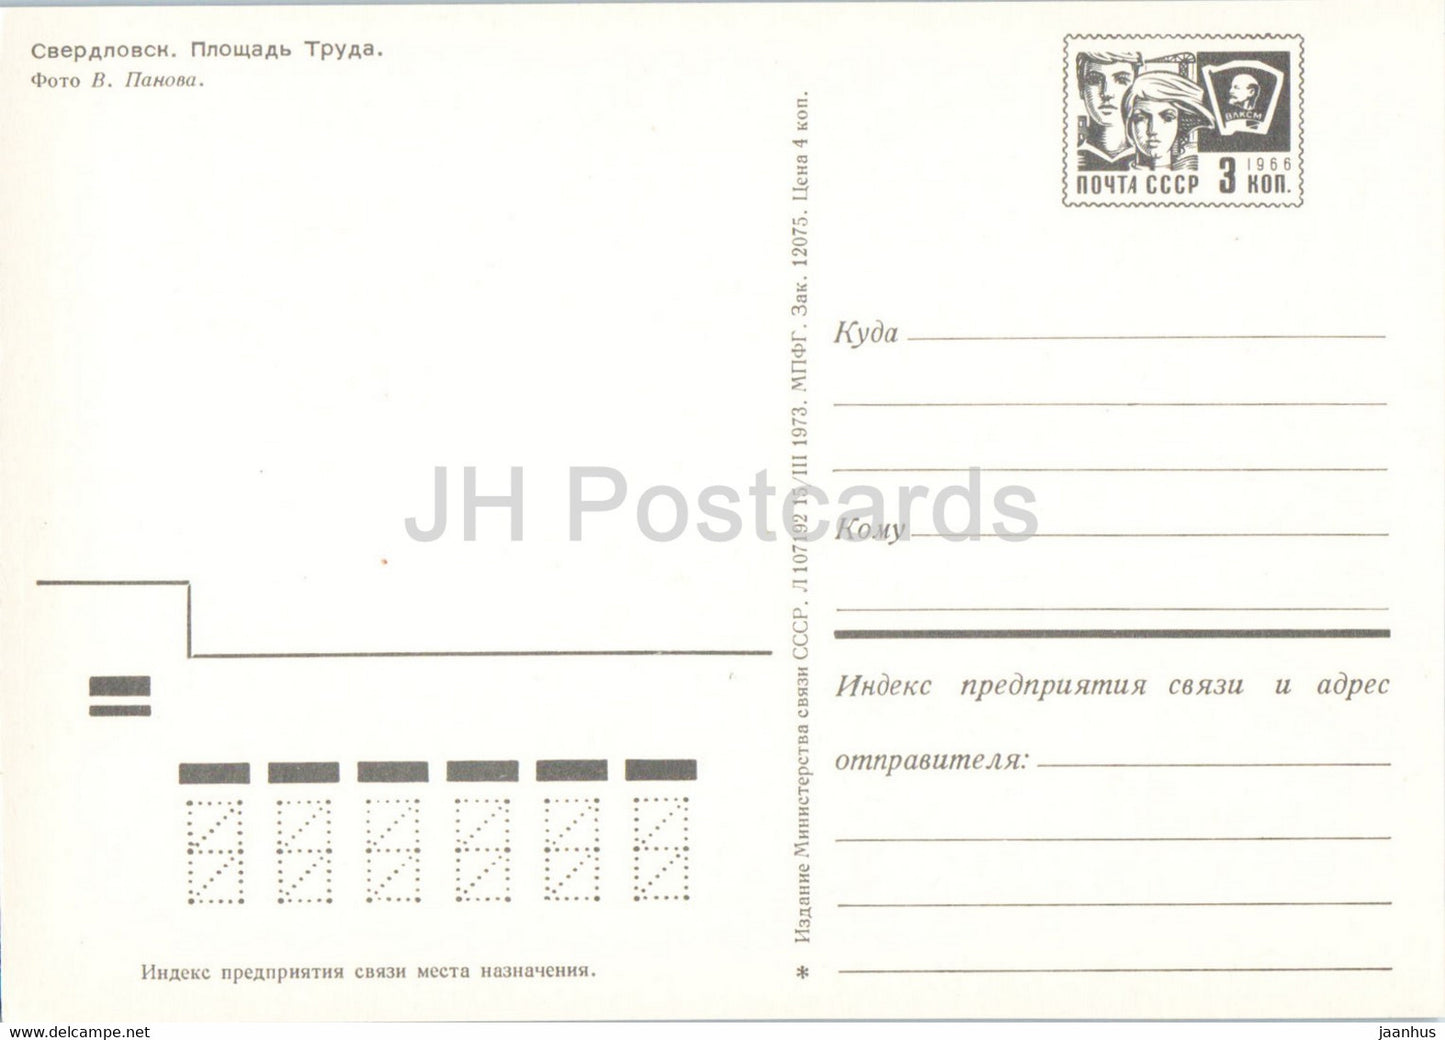 Sverdlovsk - Yekaterinburg - Labor Square - tram - postal stationery - 1973 - Russia USSR - unused